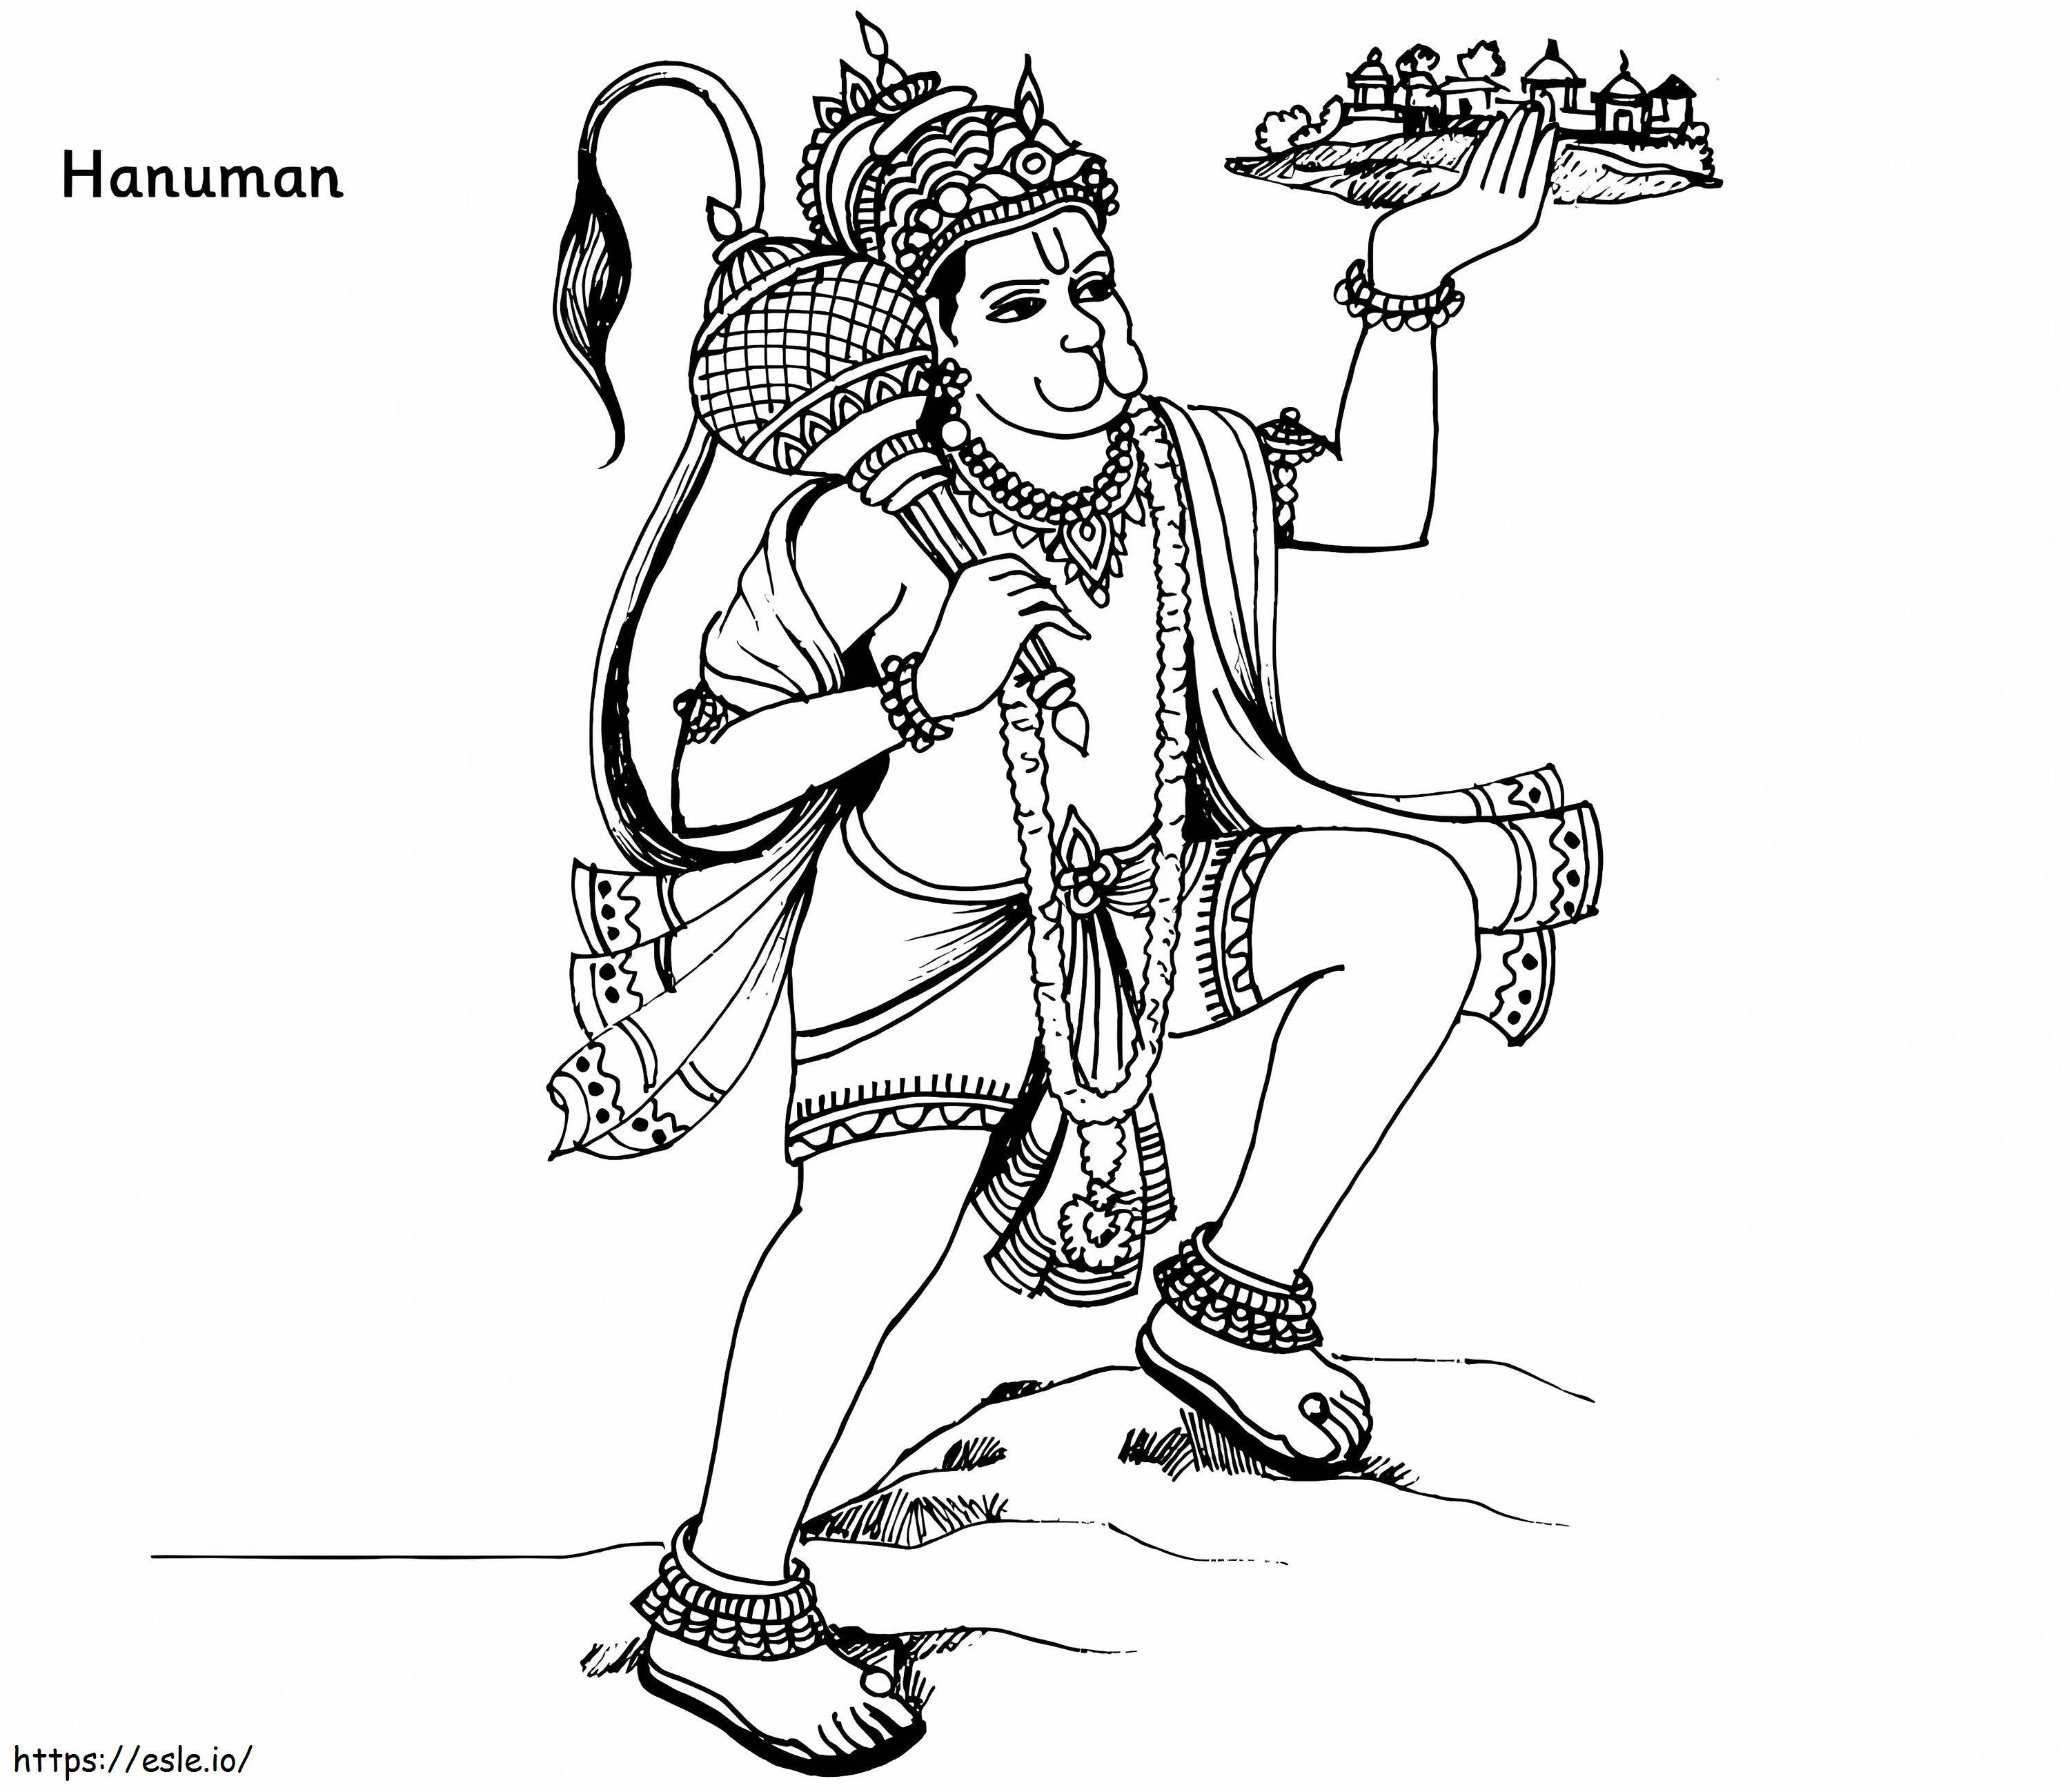 Hanumana kolorowanka